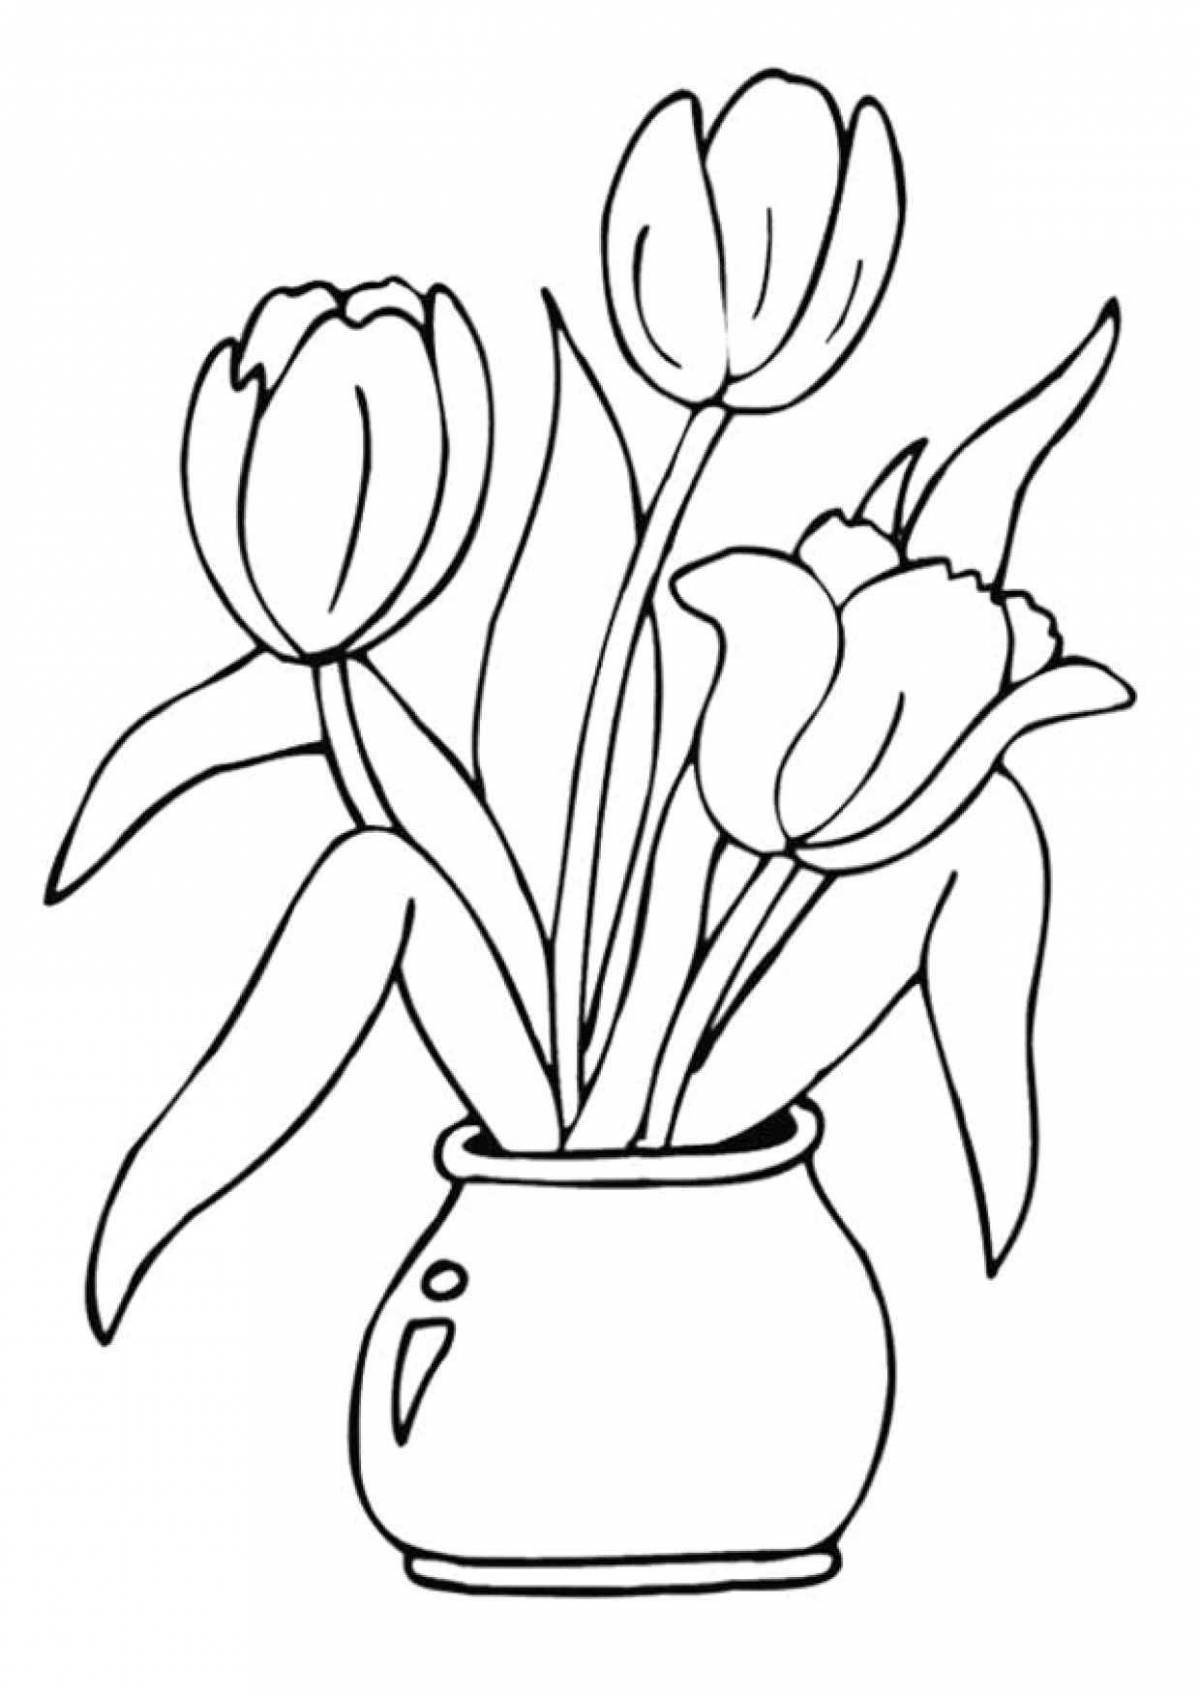 Joyful March 8 tulips coloring